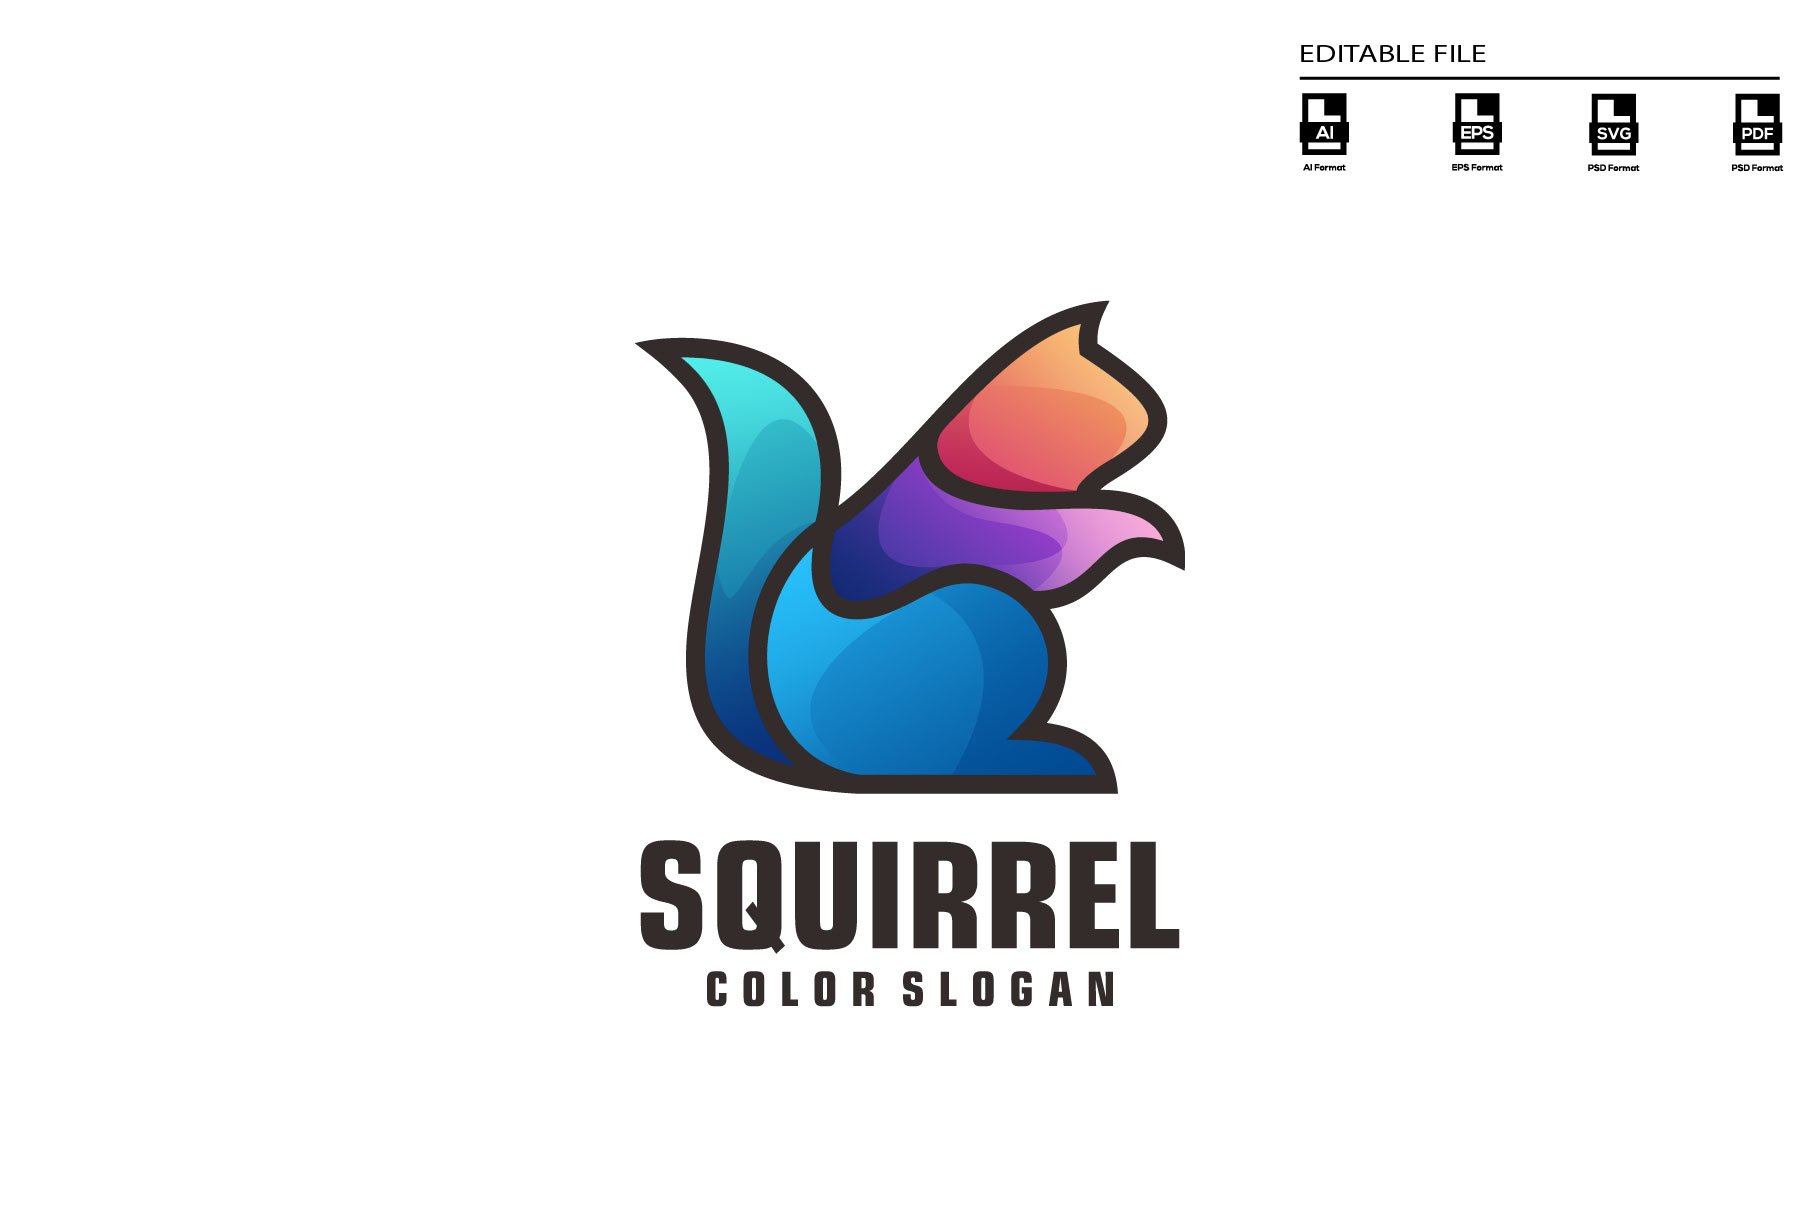 Squirrel colorful gradient logo cover image.